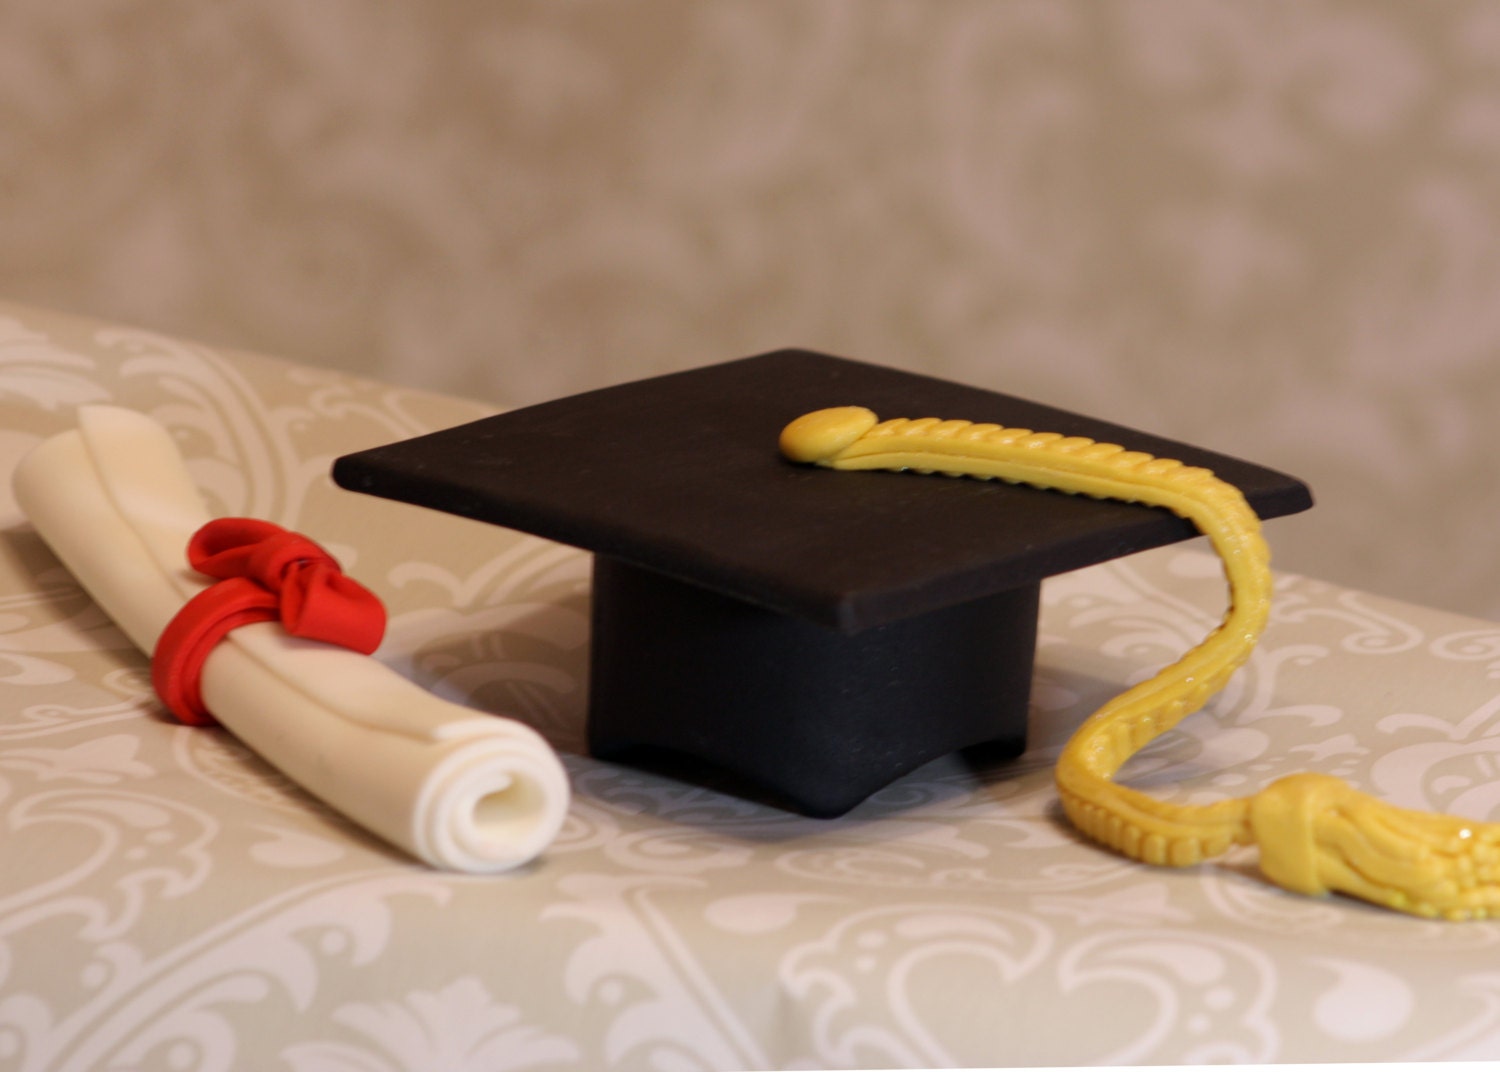 Fondant Graduation Cap and Diploma by EmmasSugarShop on Etsy